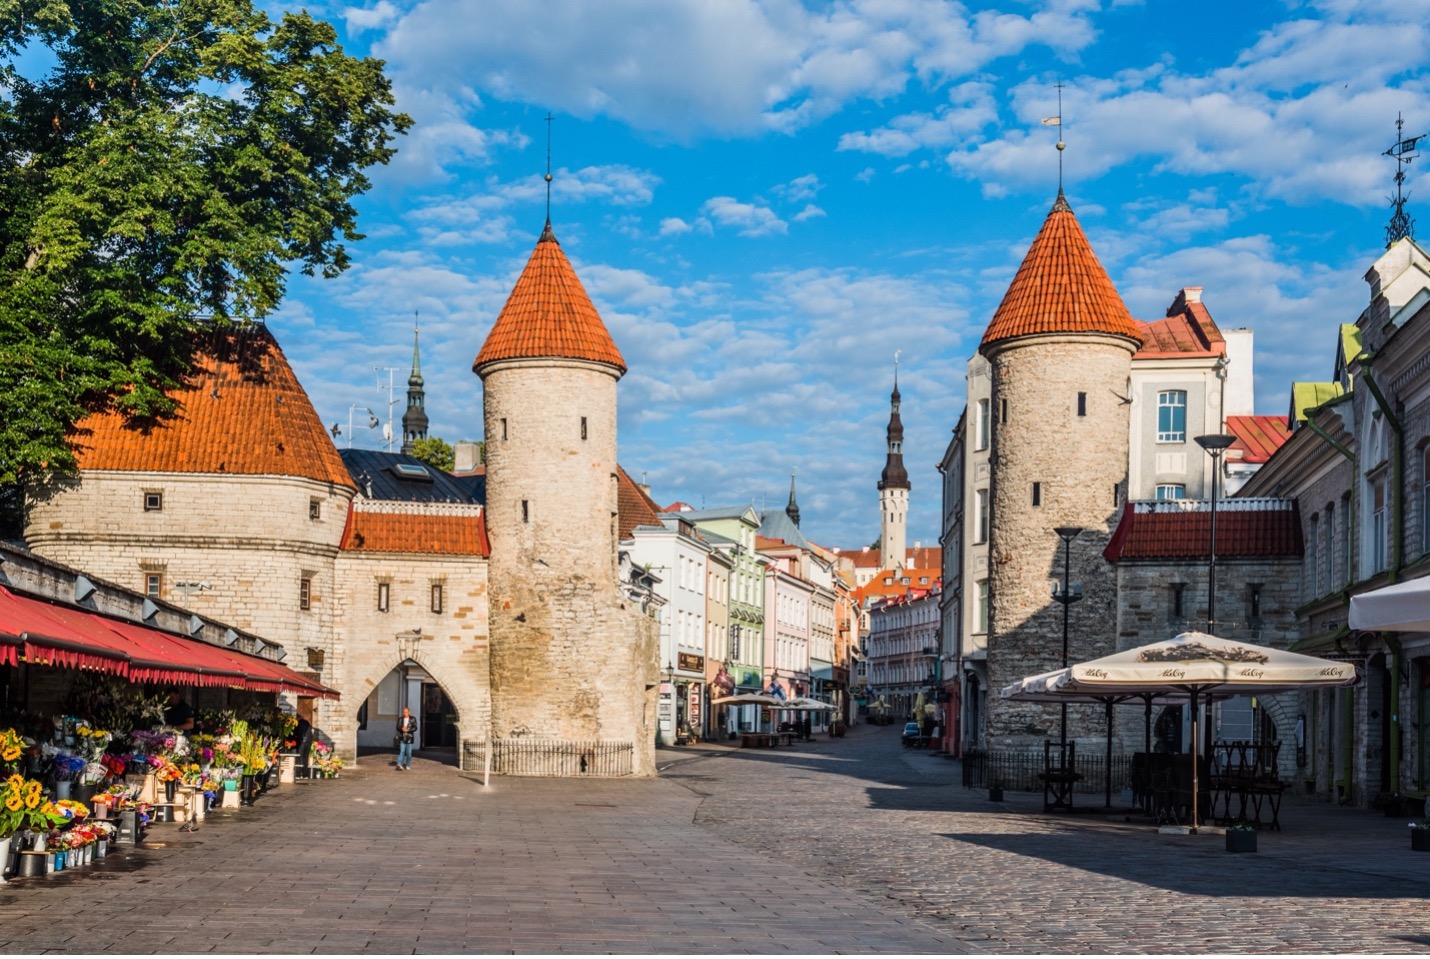 A street view of Tallinn.